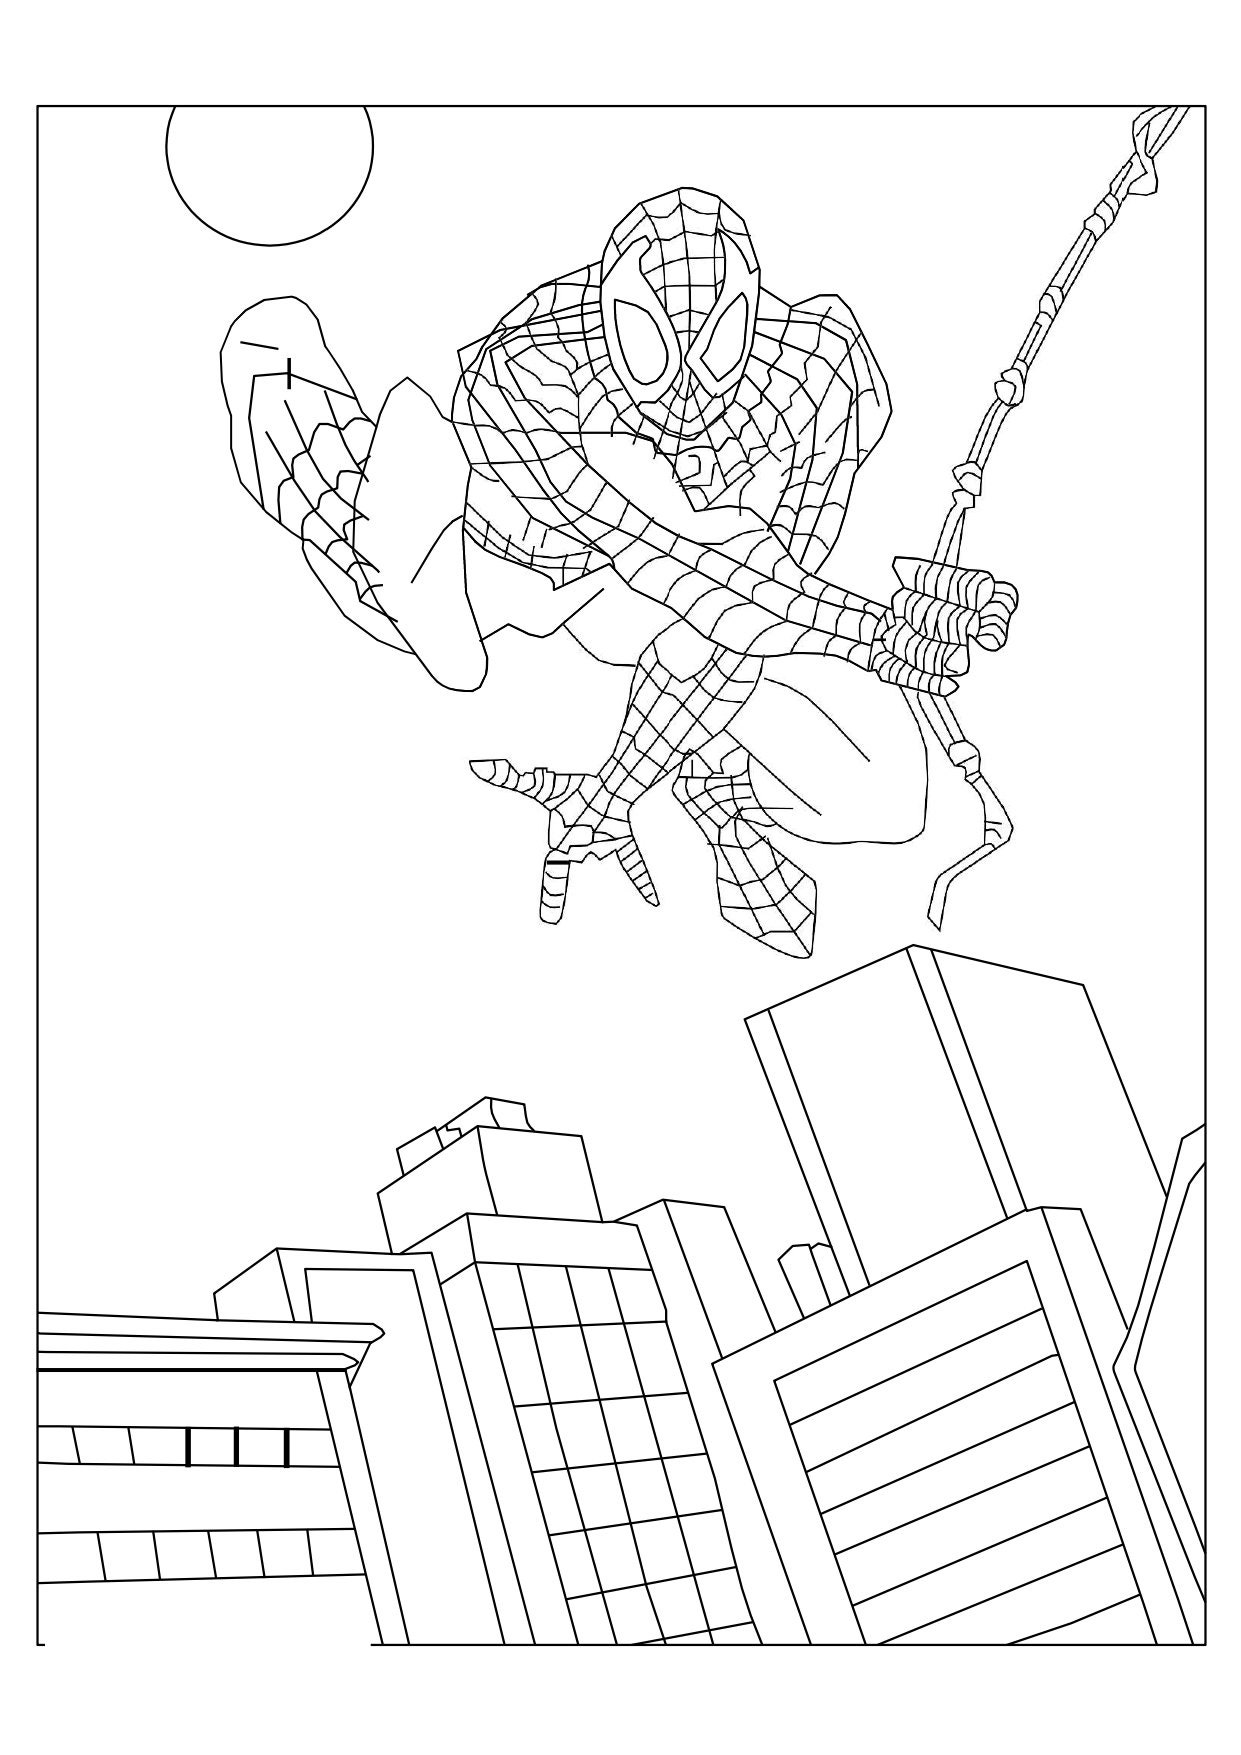 Spiderman coloring book